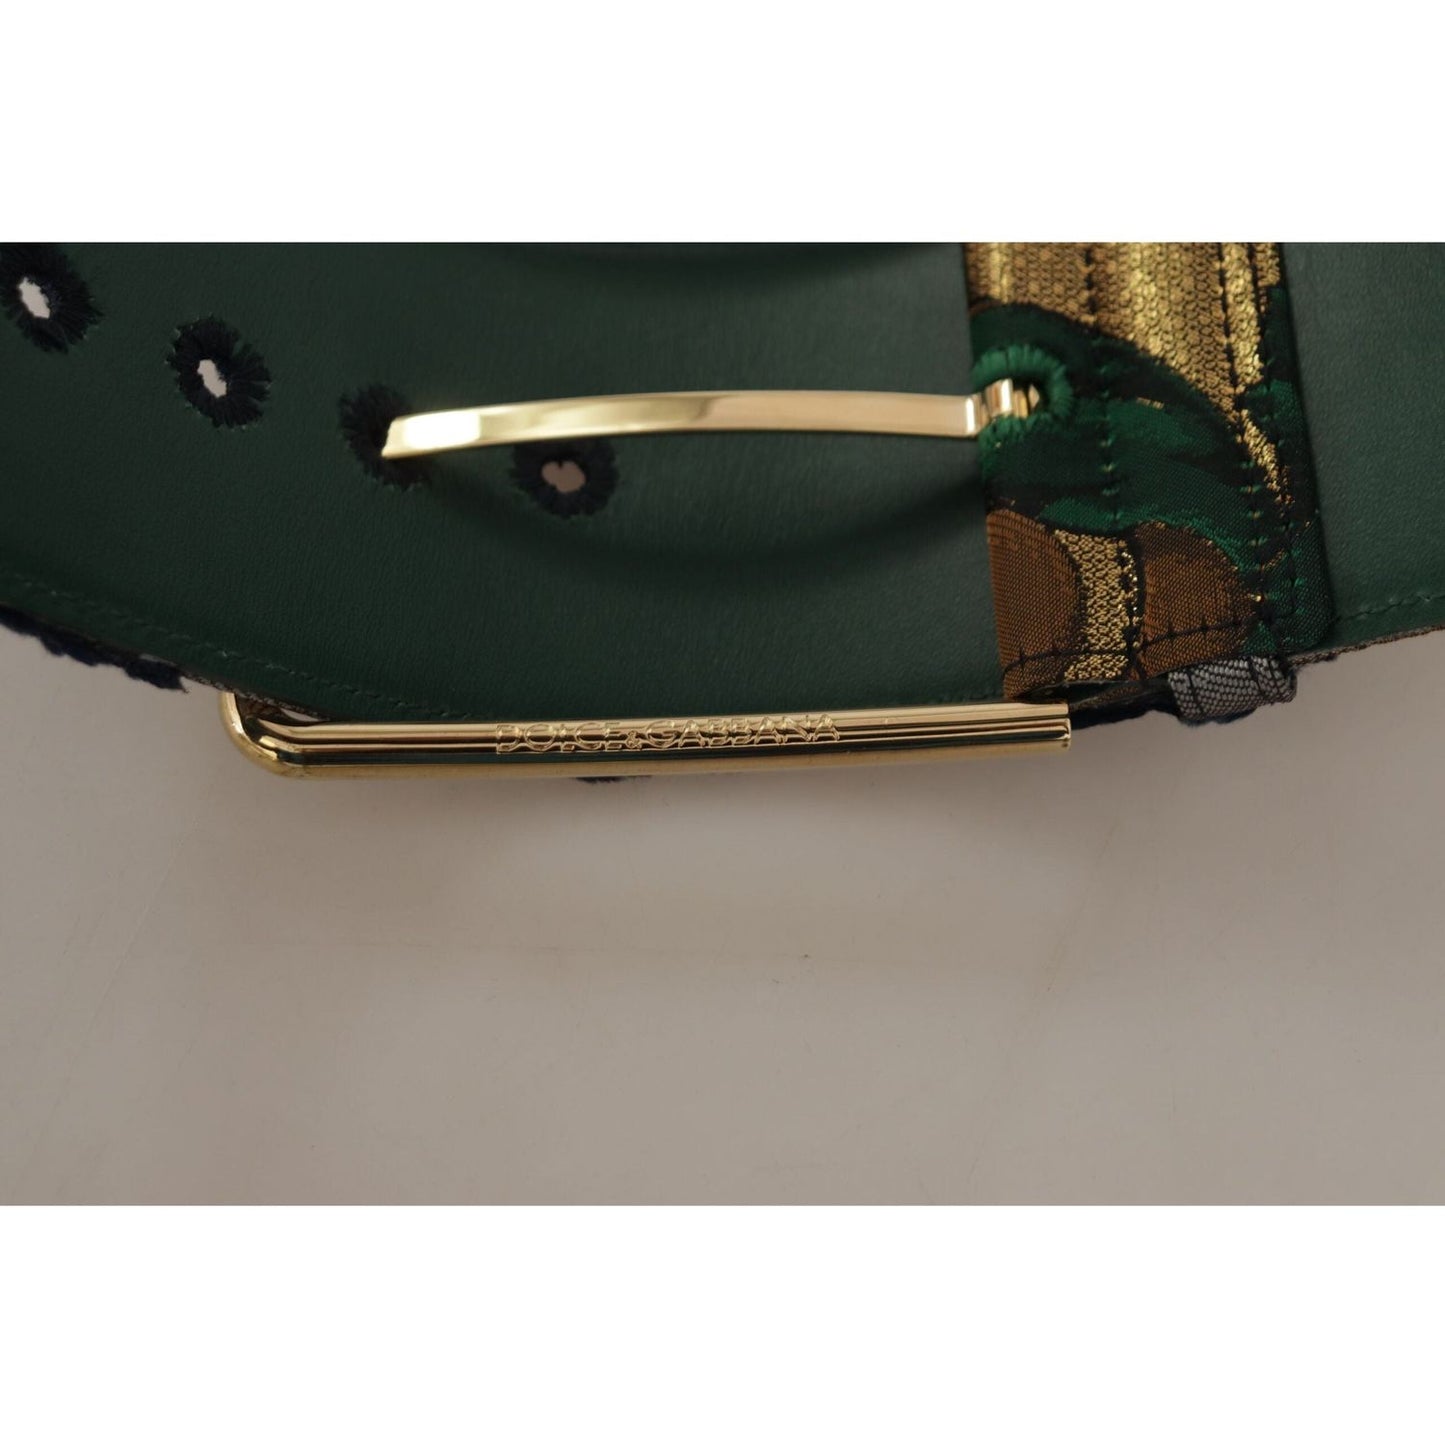 Dolce & Gabbana Elegant Green Leather Belt with Logo Buckle green-jacquard-embroid-leather-gold-metal-buckle-belt IMG_0922-scaled-85568ba5-eaf.jpg